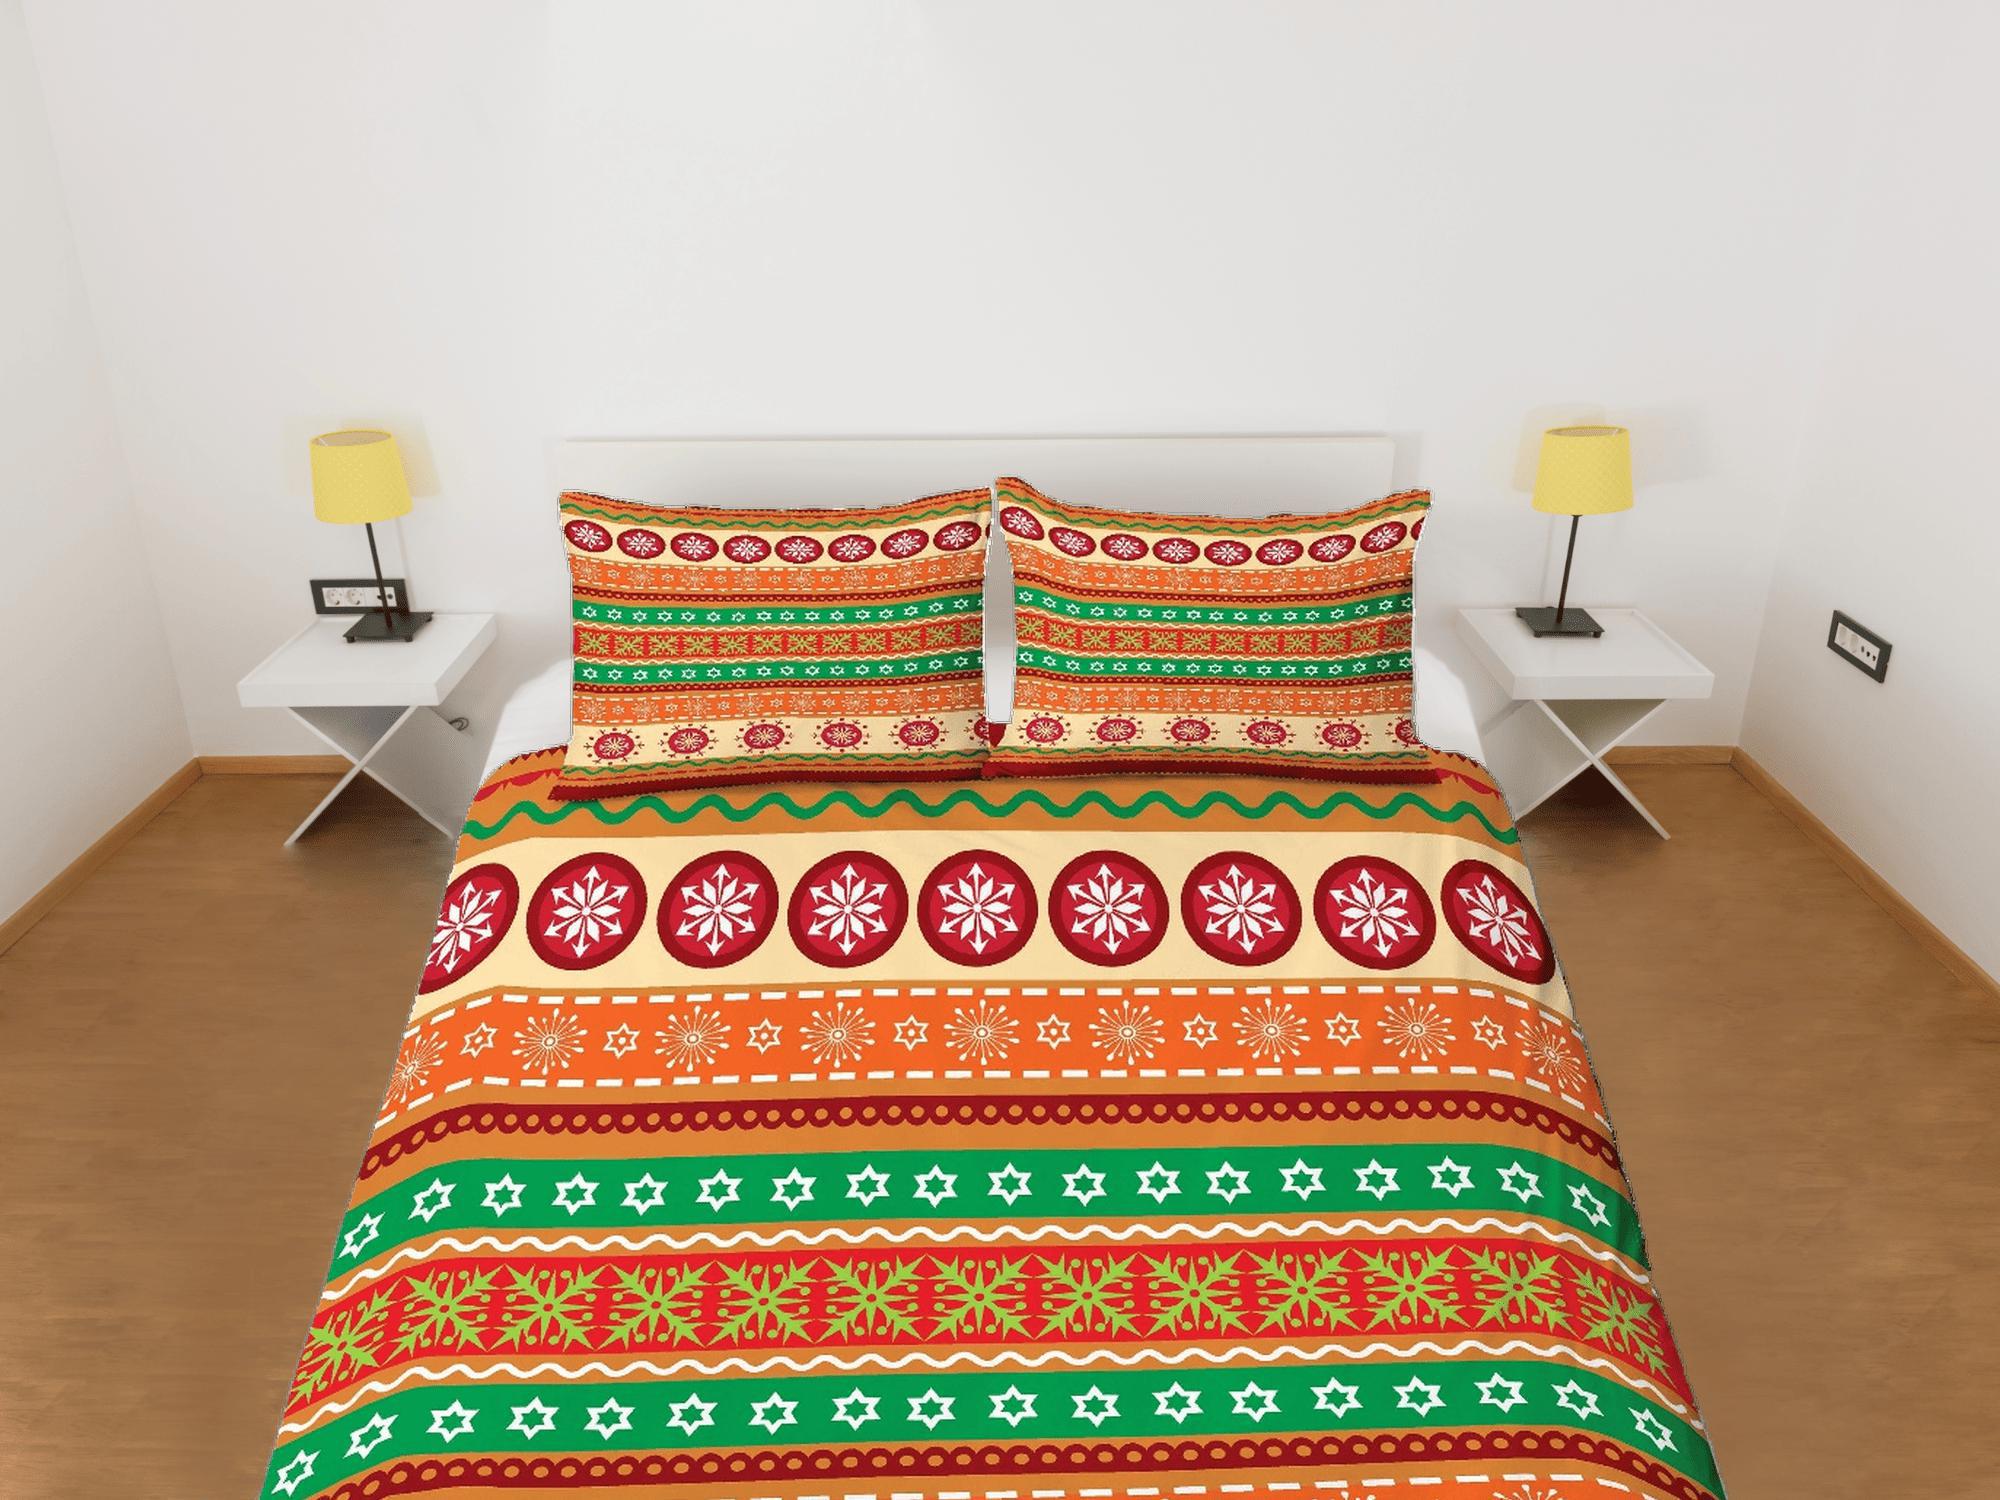 daintyduvet Christmas Duvet Cover Set with Pillows Christmas Pattern Dorm Bedding Comforter Cover Christmas Gift